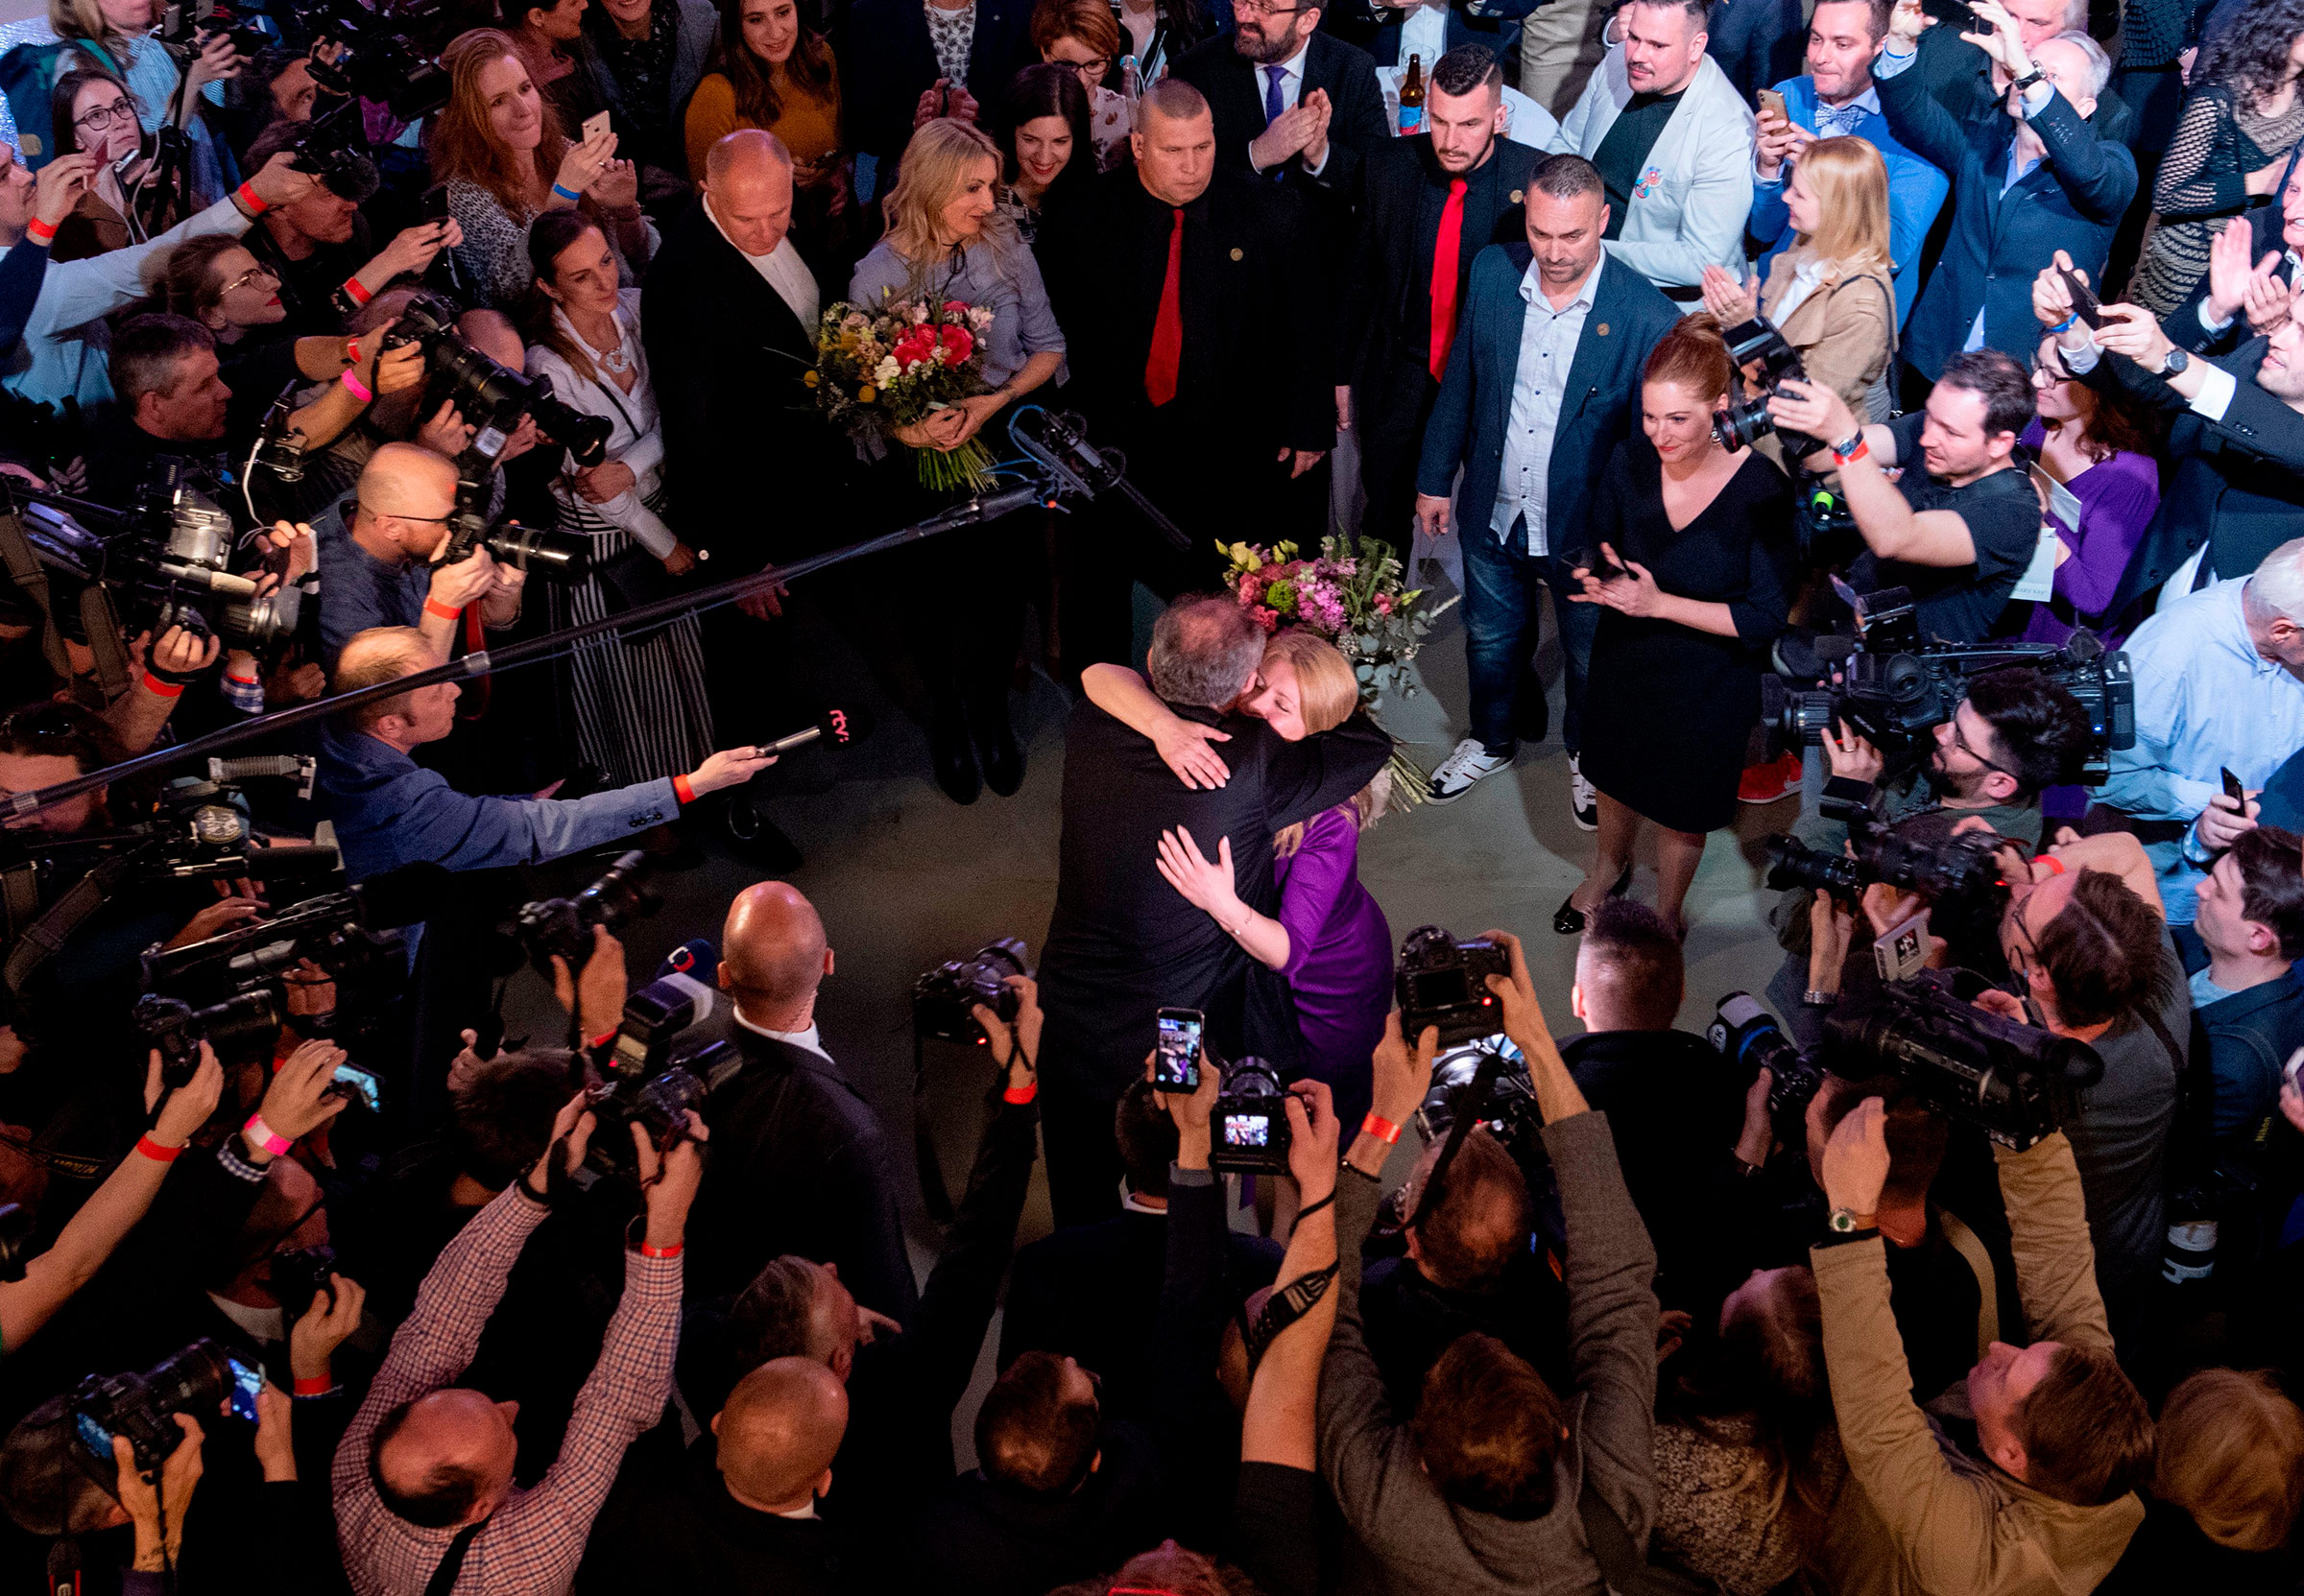 Slovak President Andrej Kiska congratulates Slovakia's President-elect Zuzana Caputova as she wins the election in Bratislava, Slovakia on March 30, 2019. (Joe Klamara—AFP/Getty Images)